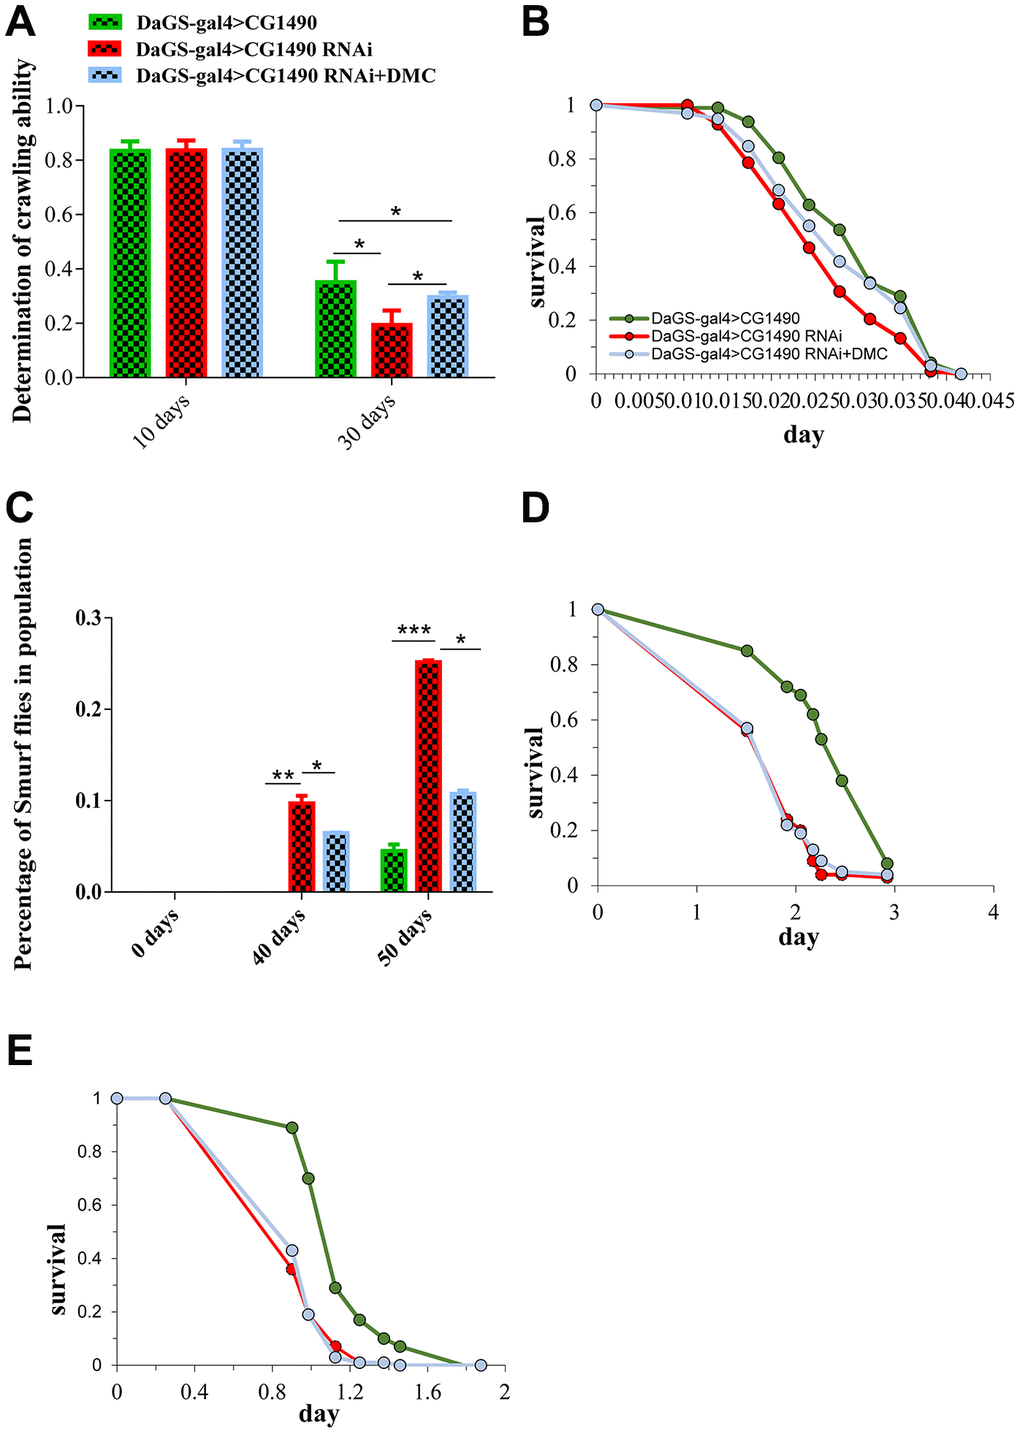 Effect of DMC addition on the senescence traits of dusp7-knockdown Drosophila. (A) Effect of DMC addition on dusp7-knockdown Drosophila (* p. (B) Effect of DMC addition on heat-stimulation tolerance in dusp7-knockdown Drosophila. (C) Effect of DMC addition on H2O2 tolerance in dusp7-knockdown Drosophila (* pppD, E) Effect of DMC addition on paraquat (D) and H2O2 (E) tolerance in dusp7-knockdown Drosophila. (>: hybridization).